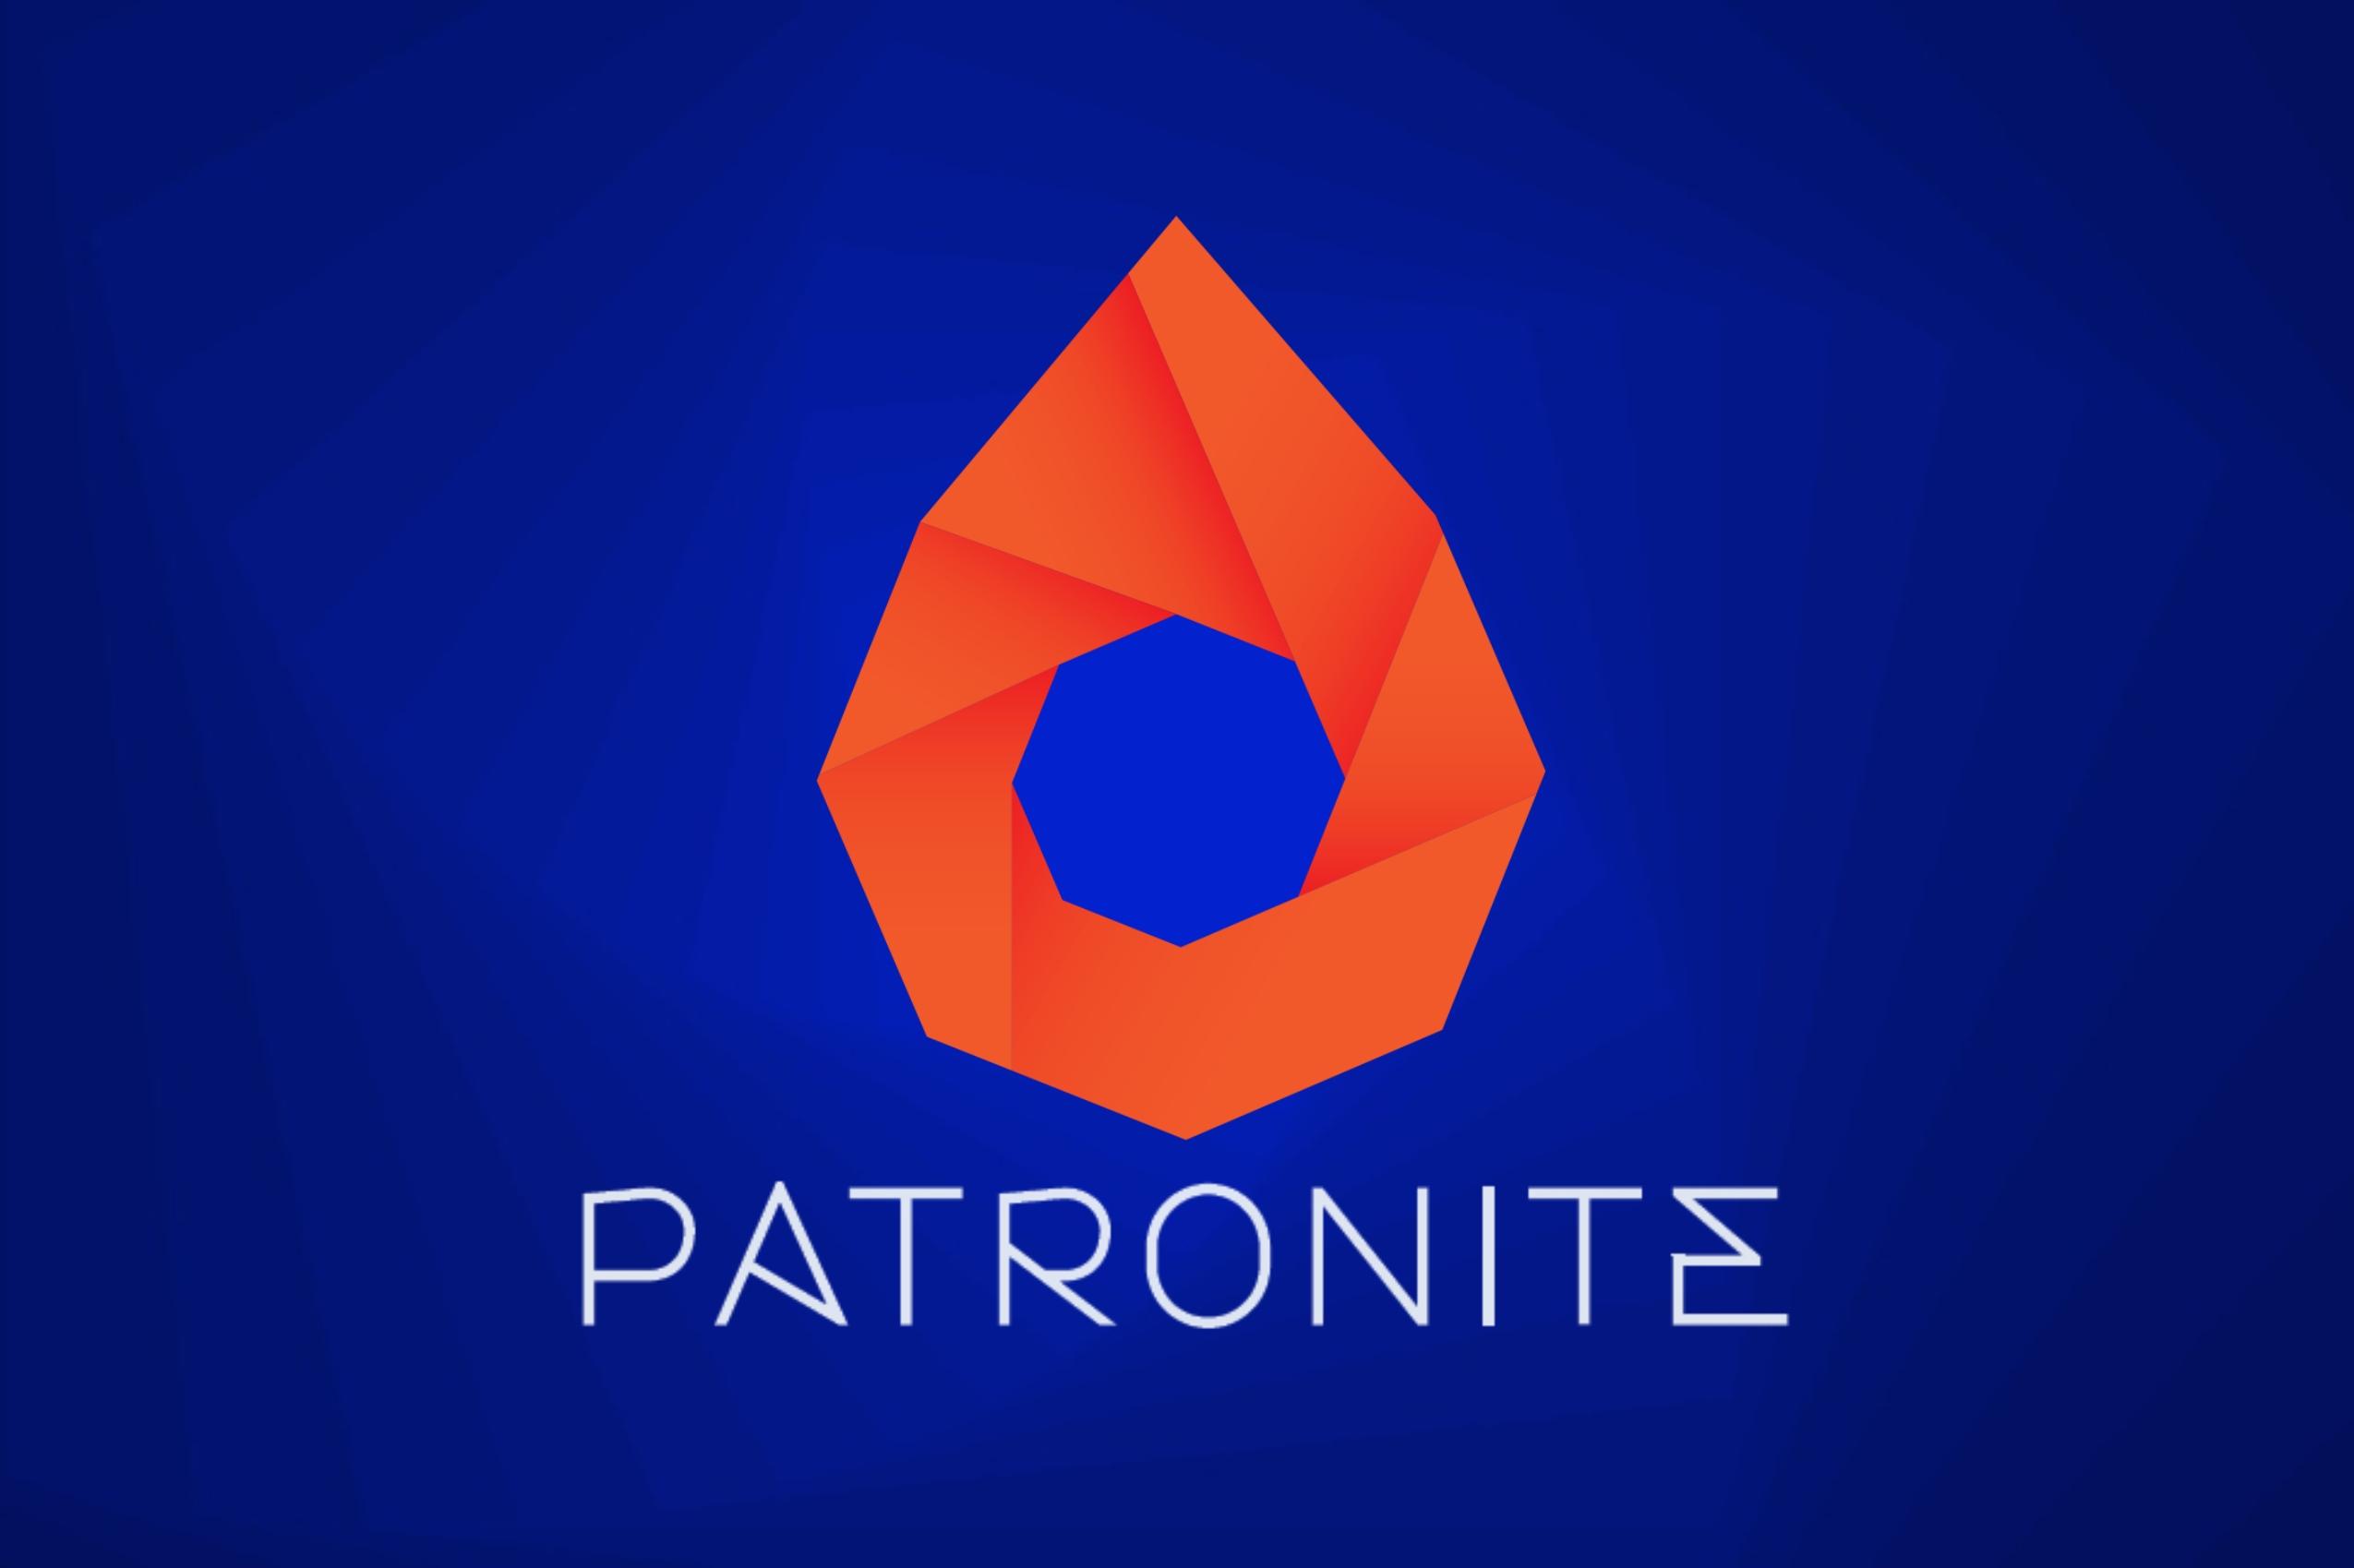 patronite logos-6 - Logo i nazwa - blue 2550x1700 (3do2)